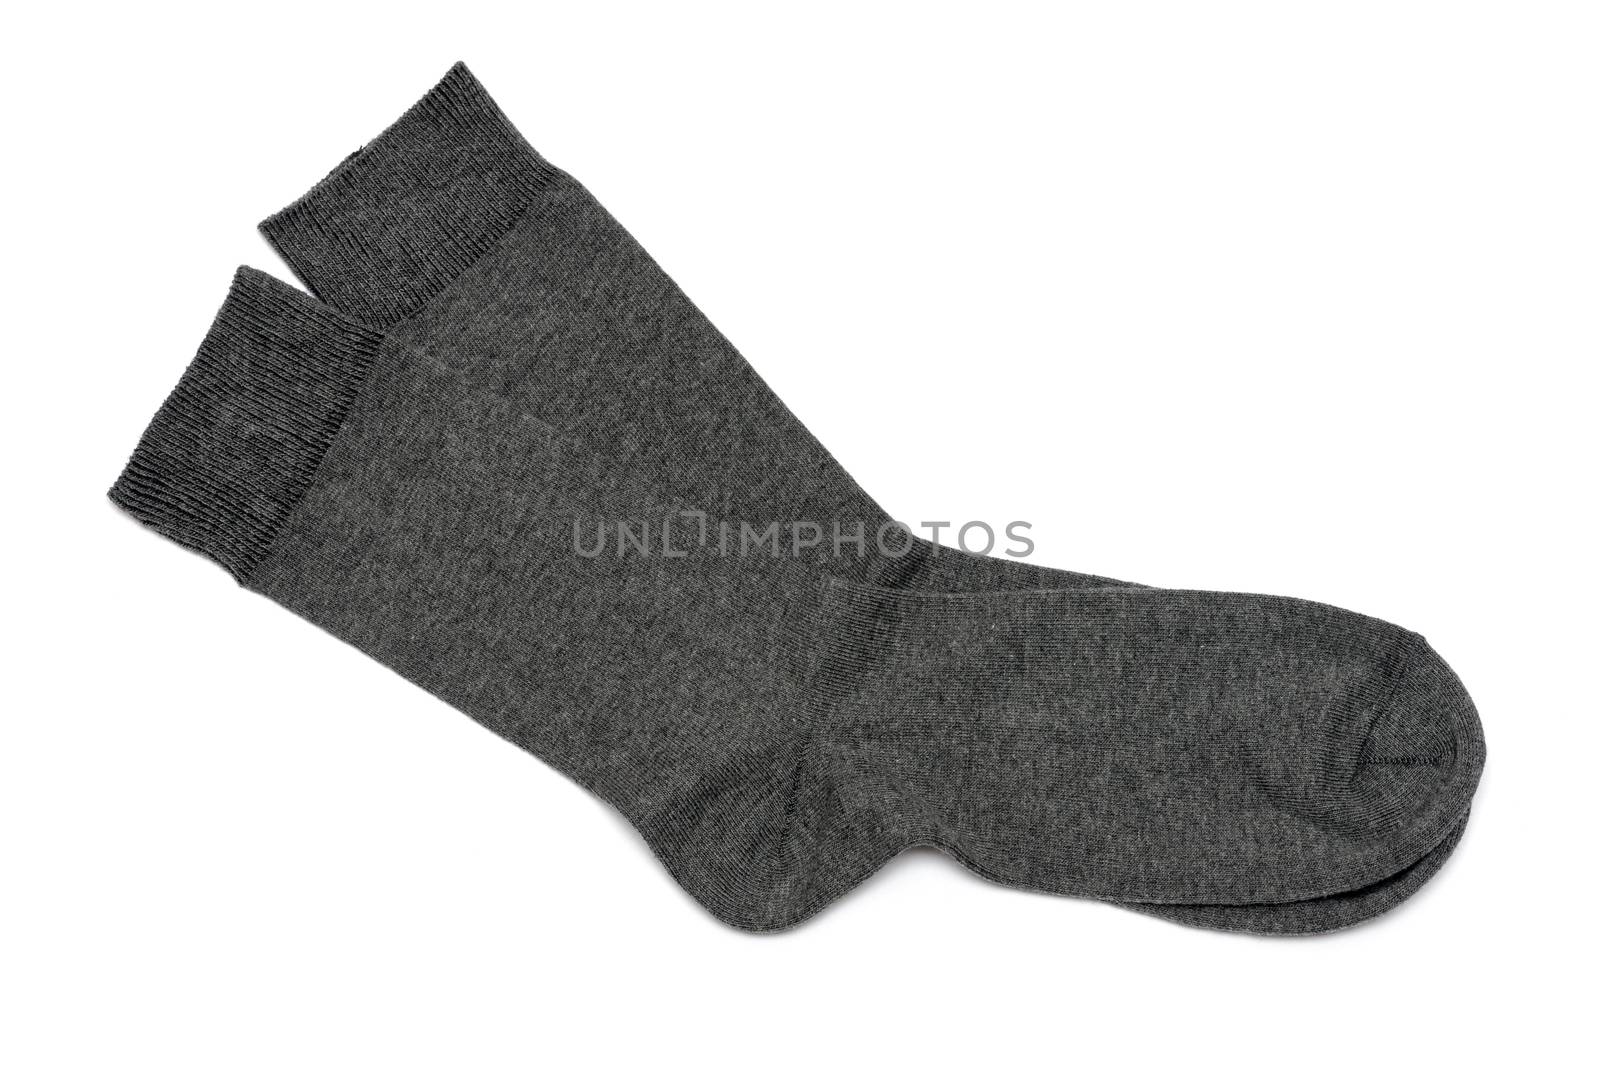 gray socks on a white background